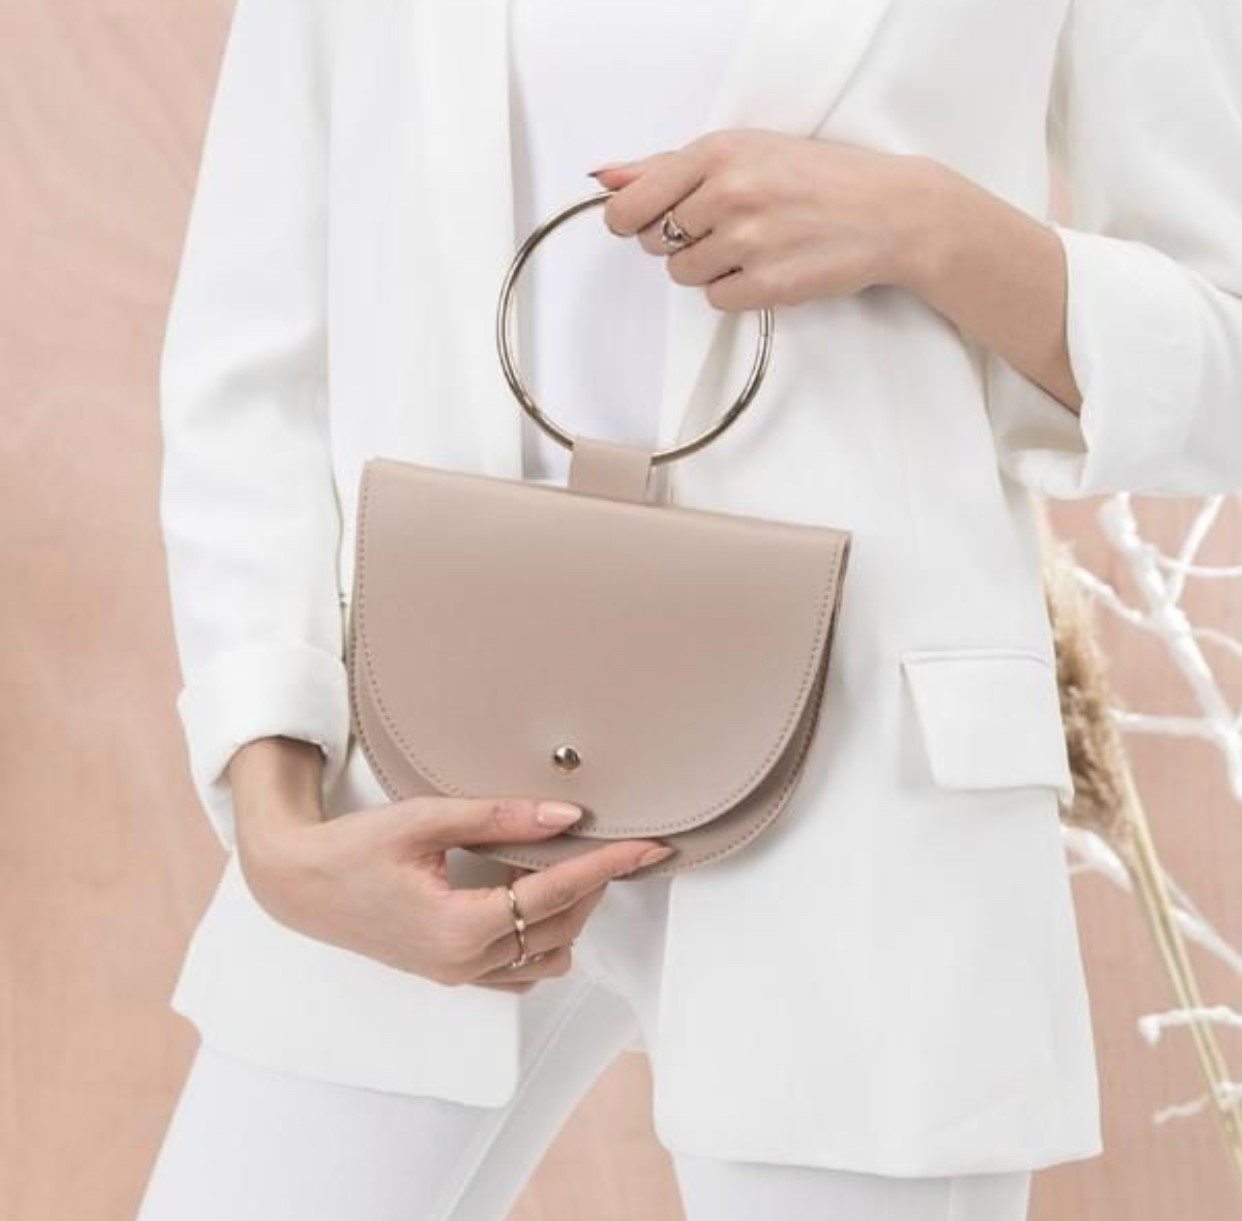 Bracelet Handbags beige handbag Fashion trends Blazer white office outfit